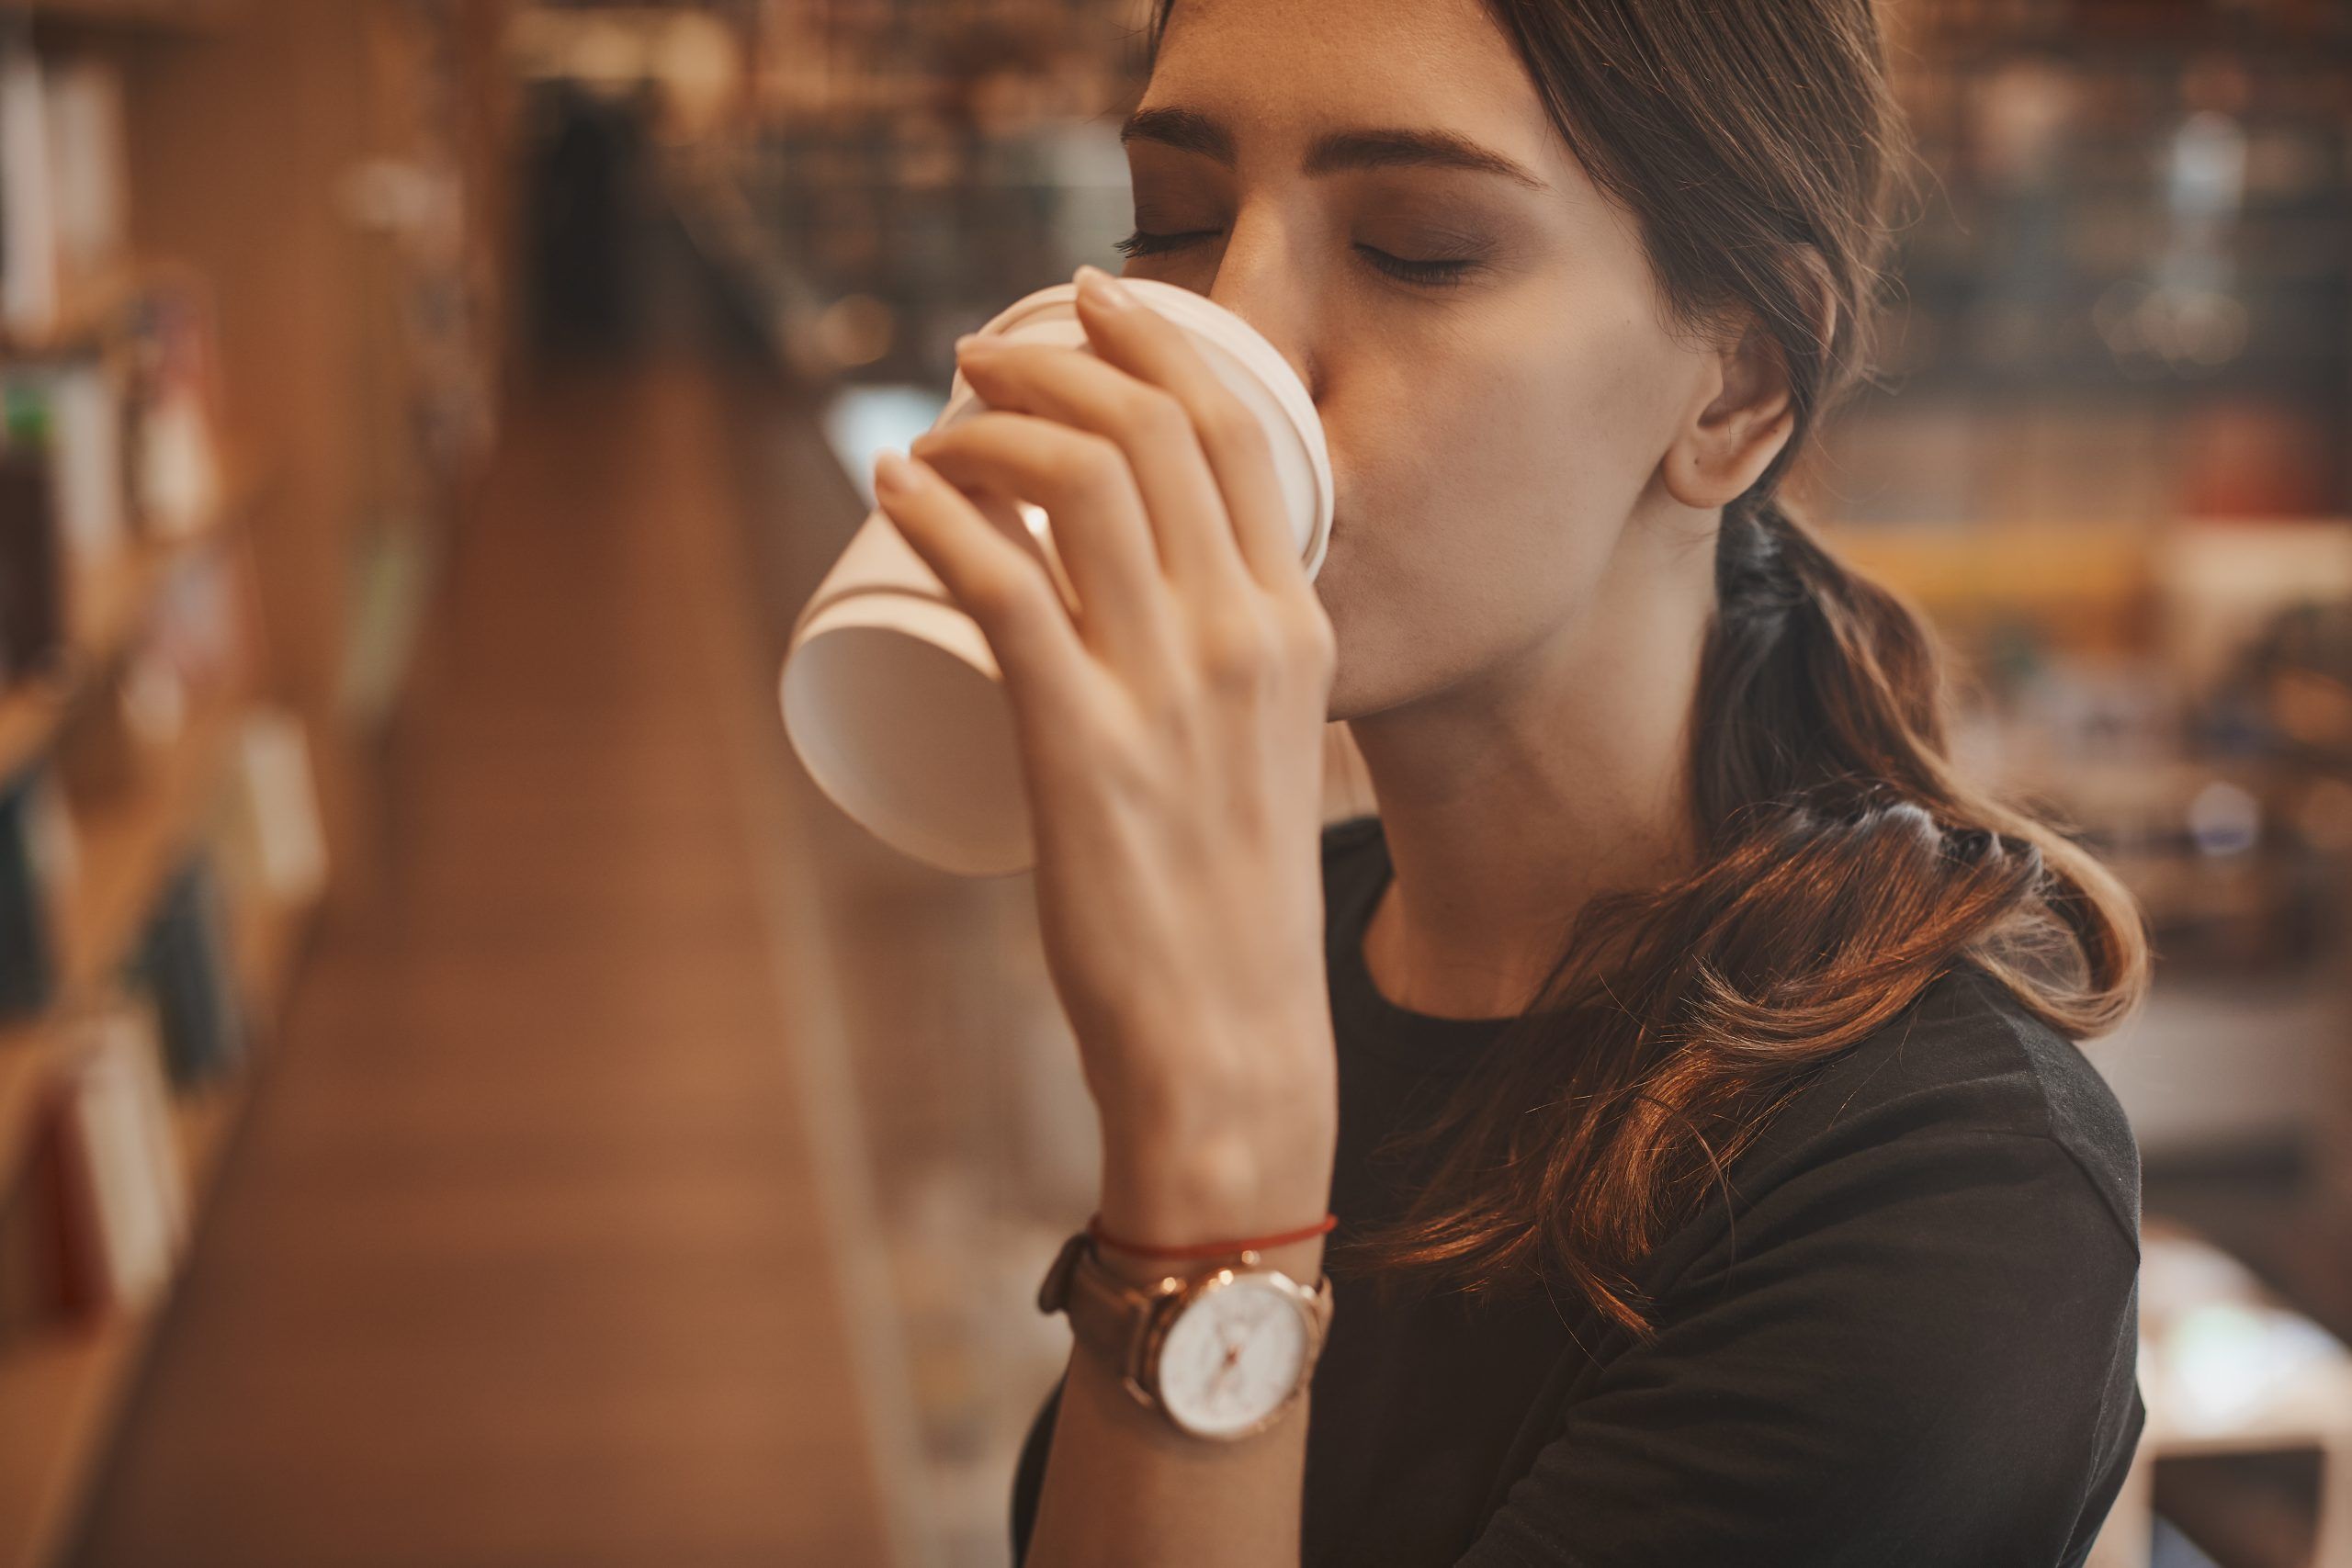 Coffee linked to bone disease, obesity: study